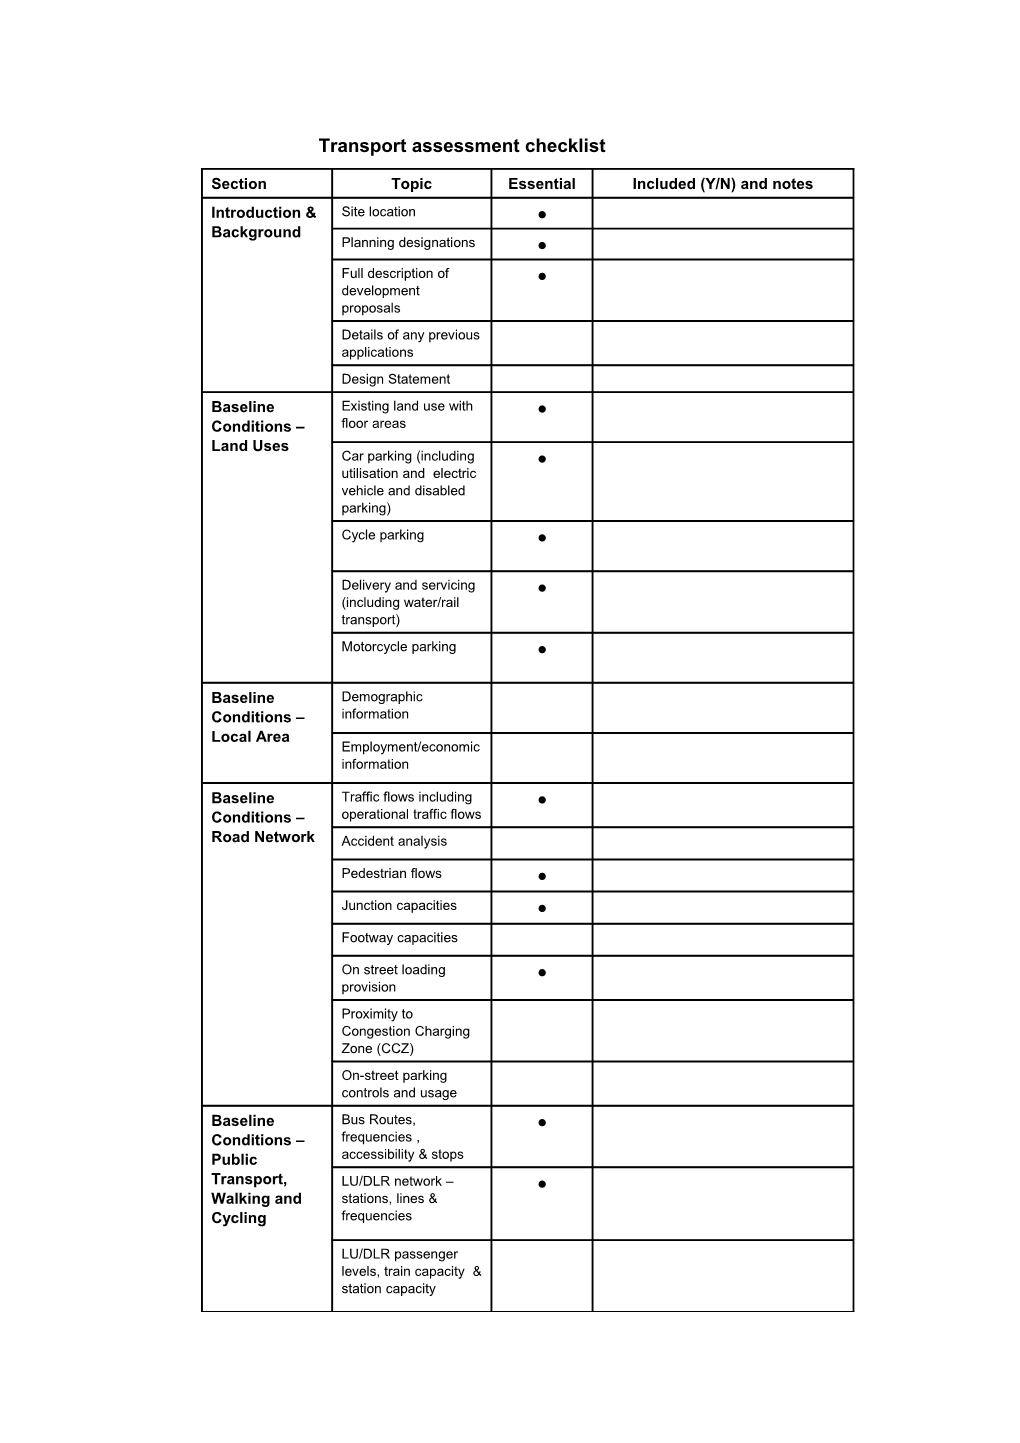 Transport Assessment Checklist